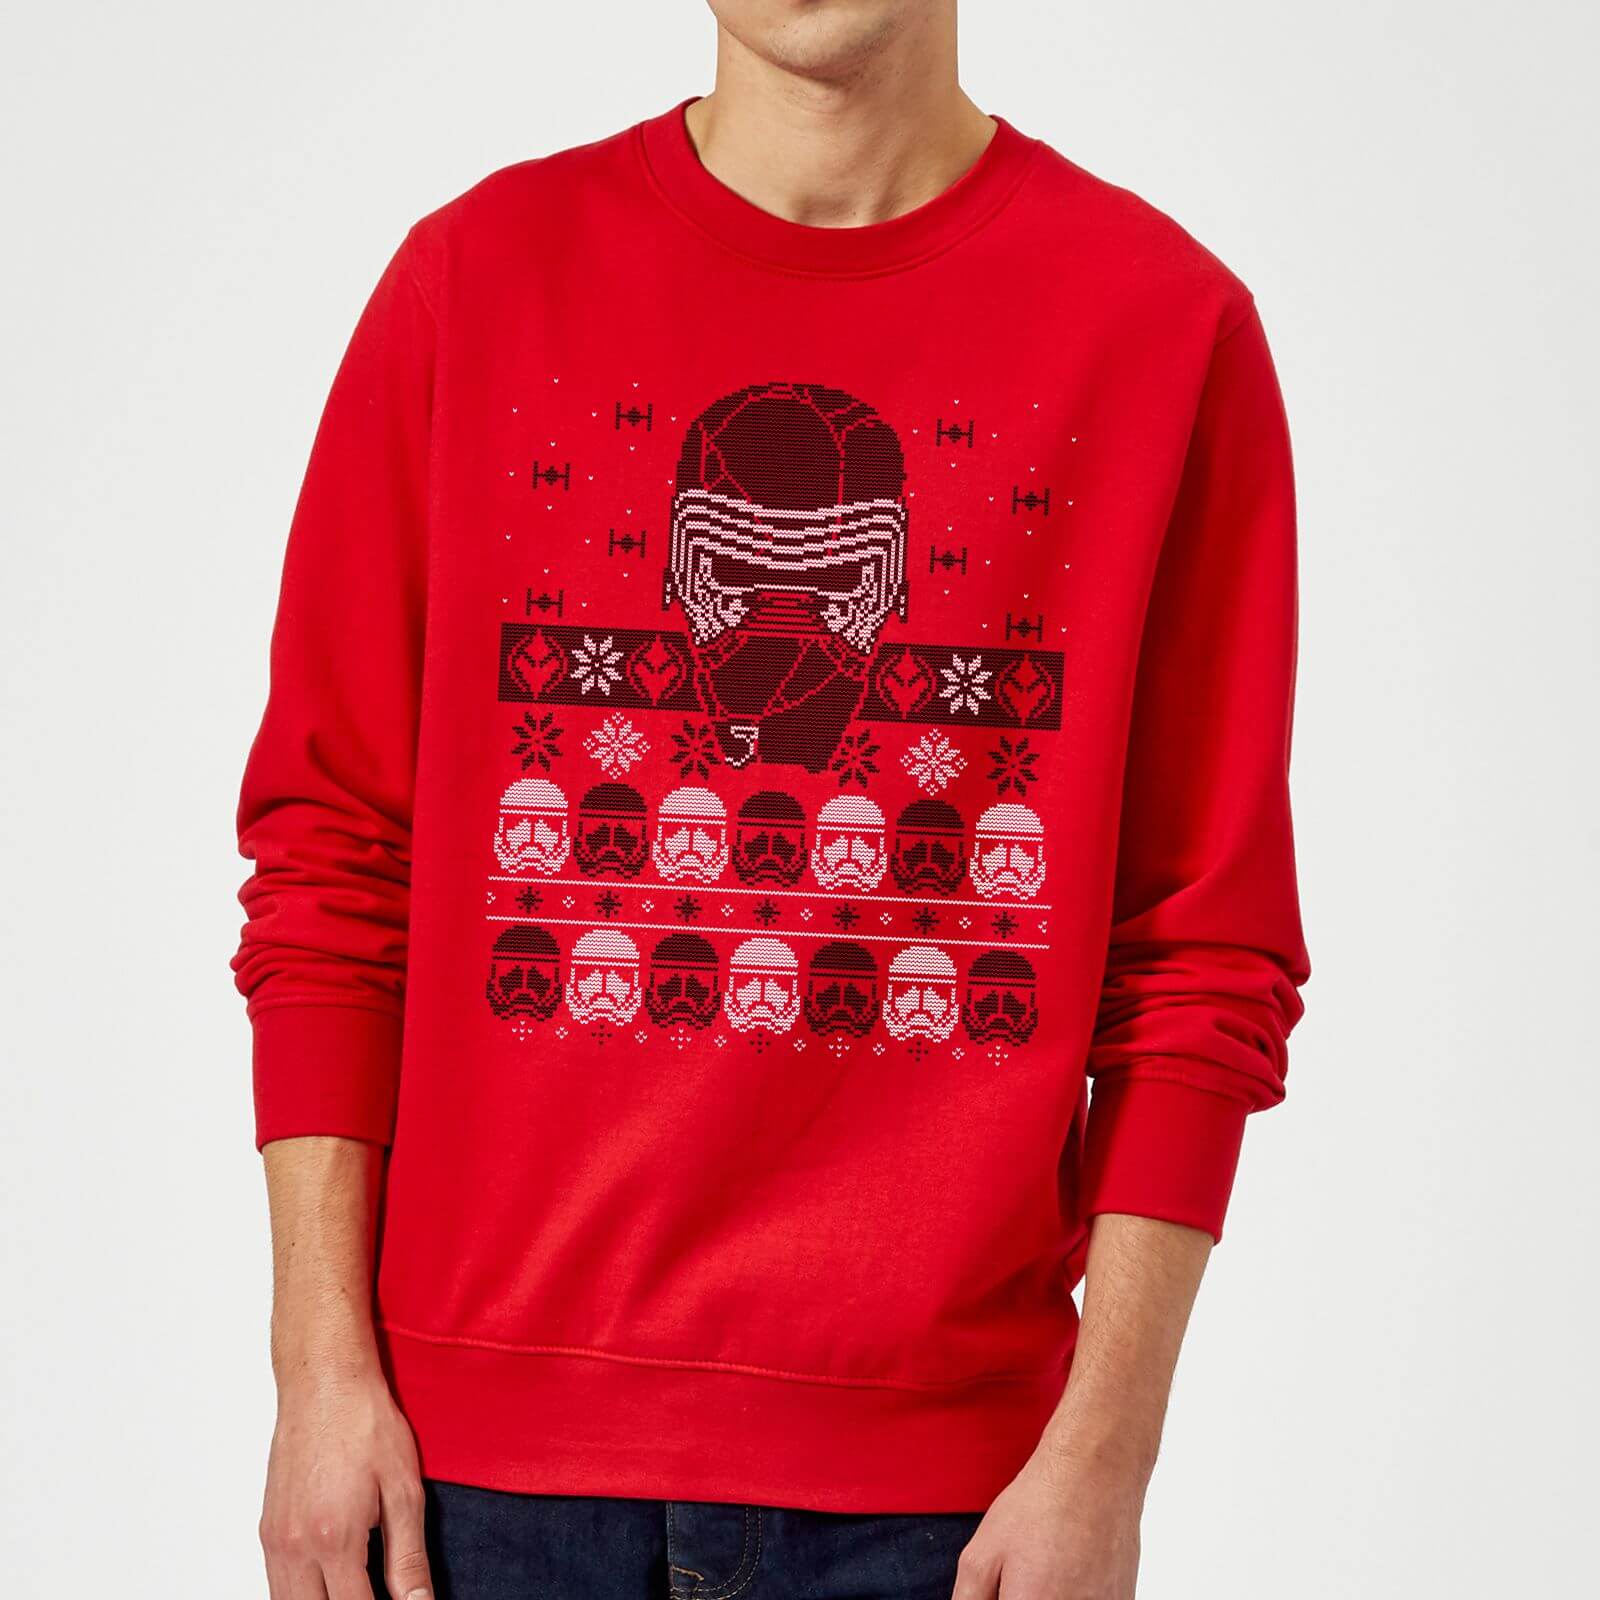 Star Wars Kylo Ren Ugly Holiday Sweatshirt - Red - M